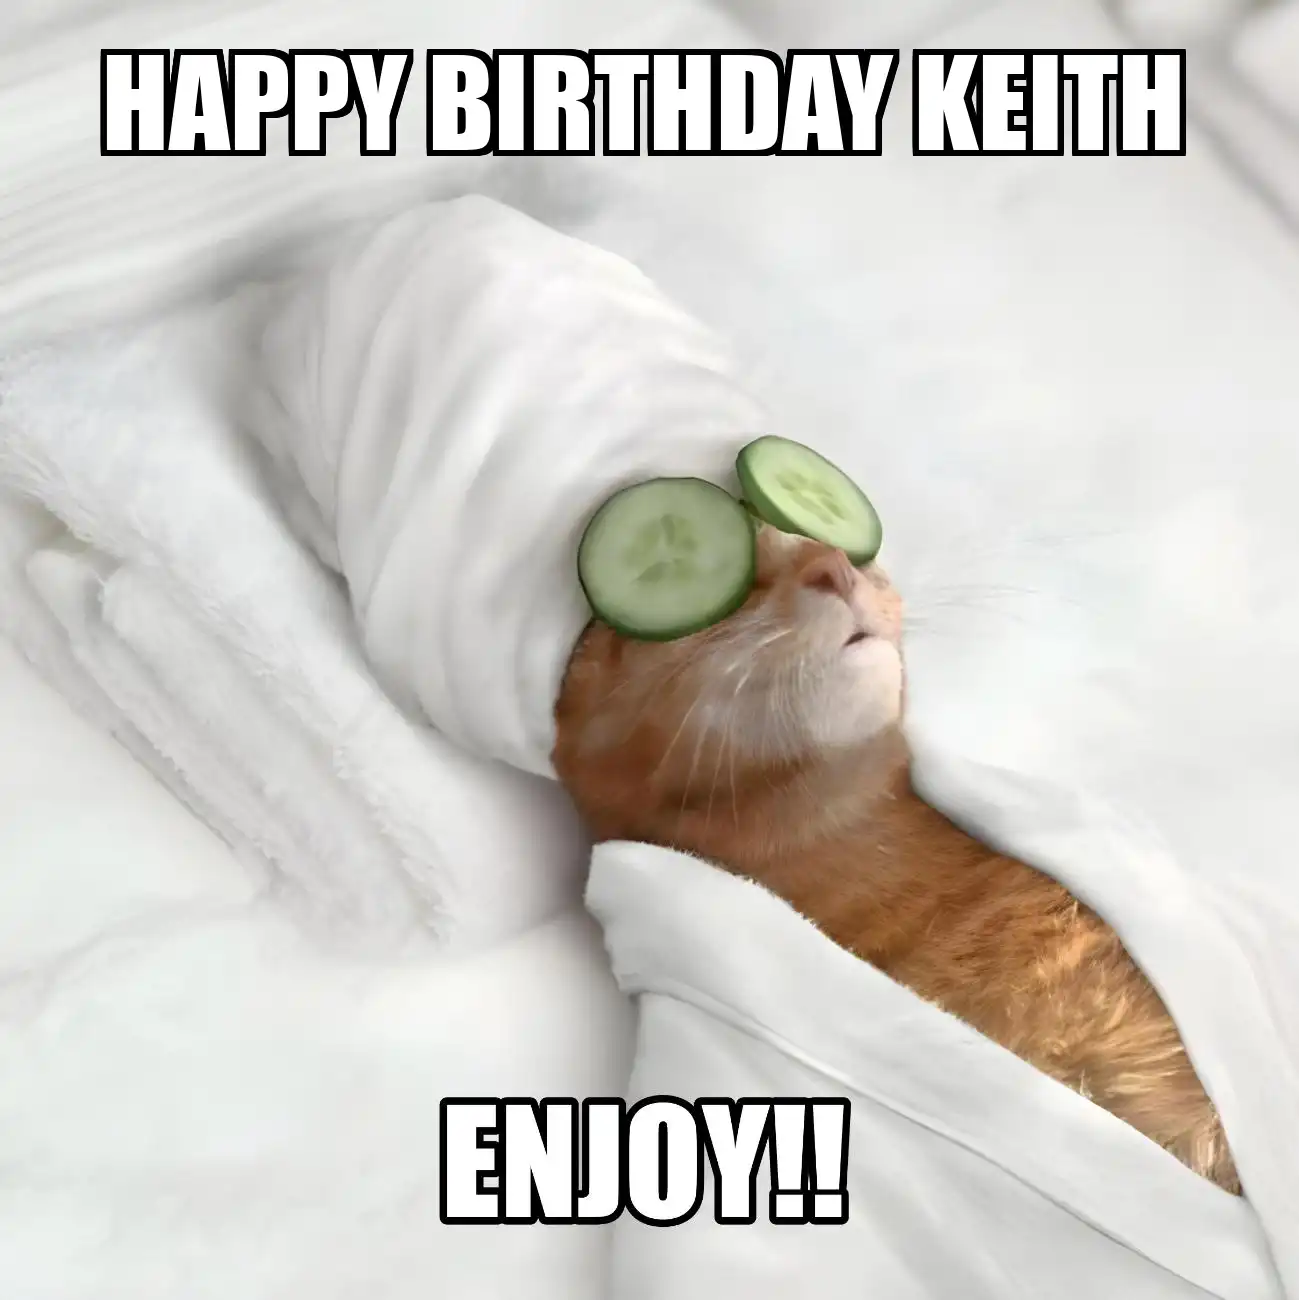 Happy Birthday Keith Enjoy Cat Meme